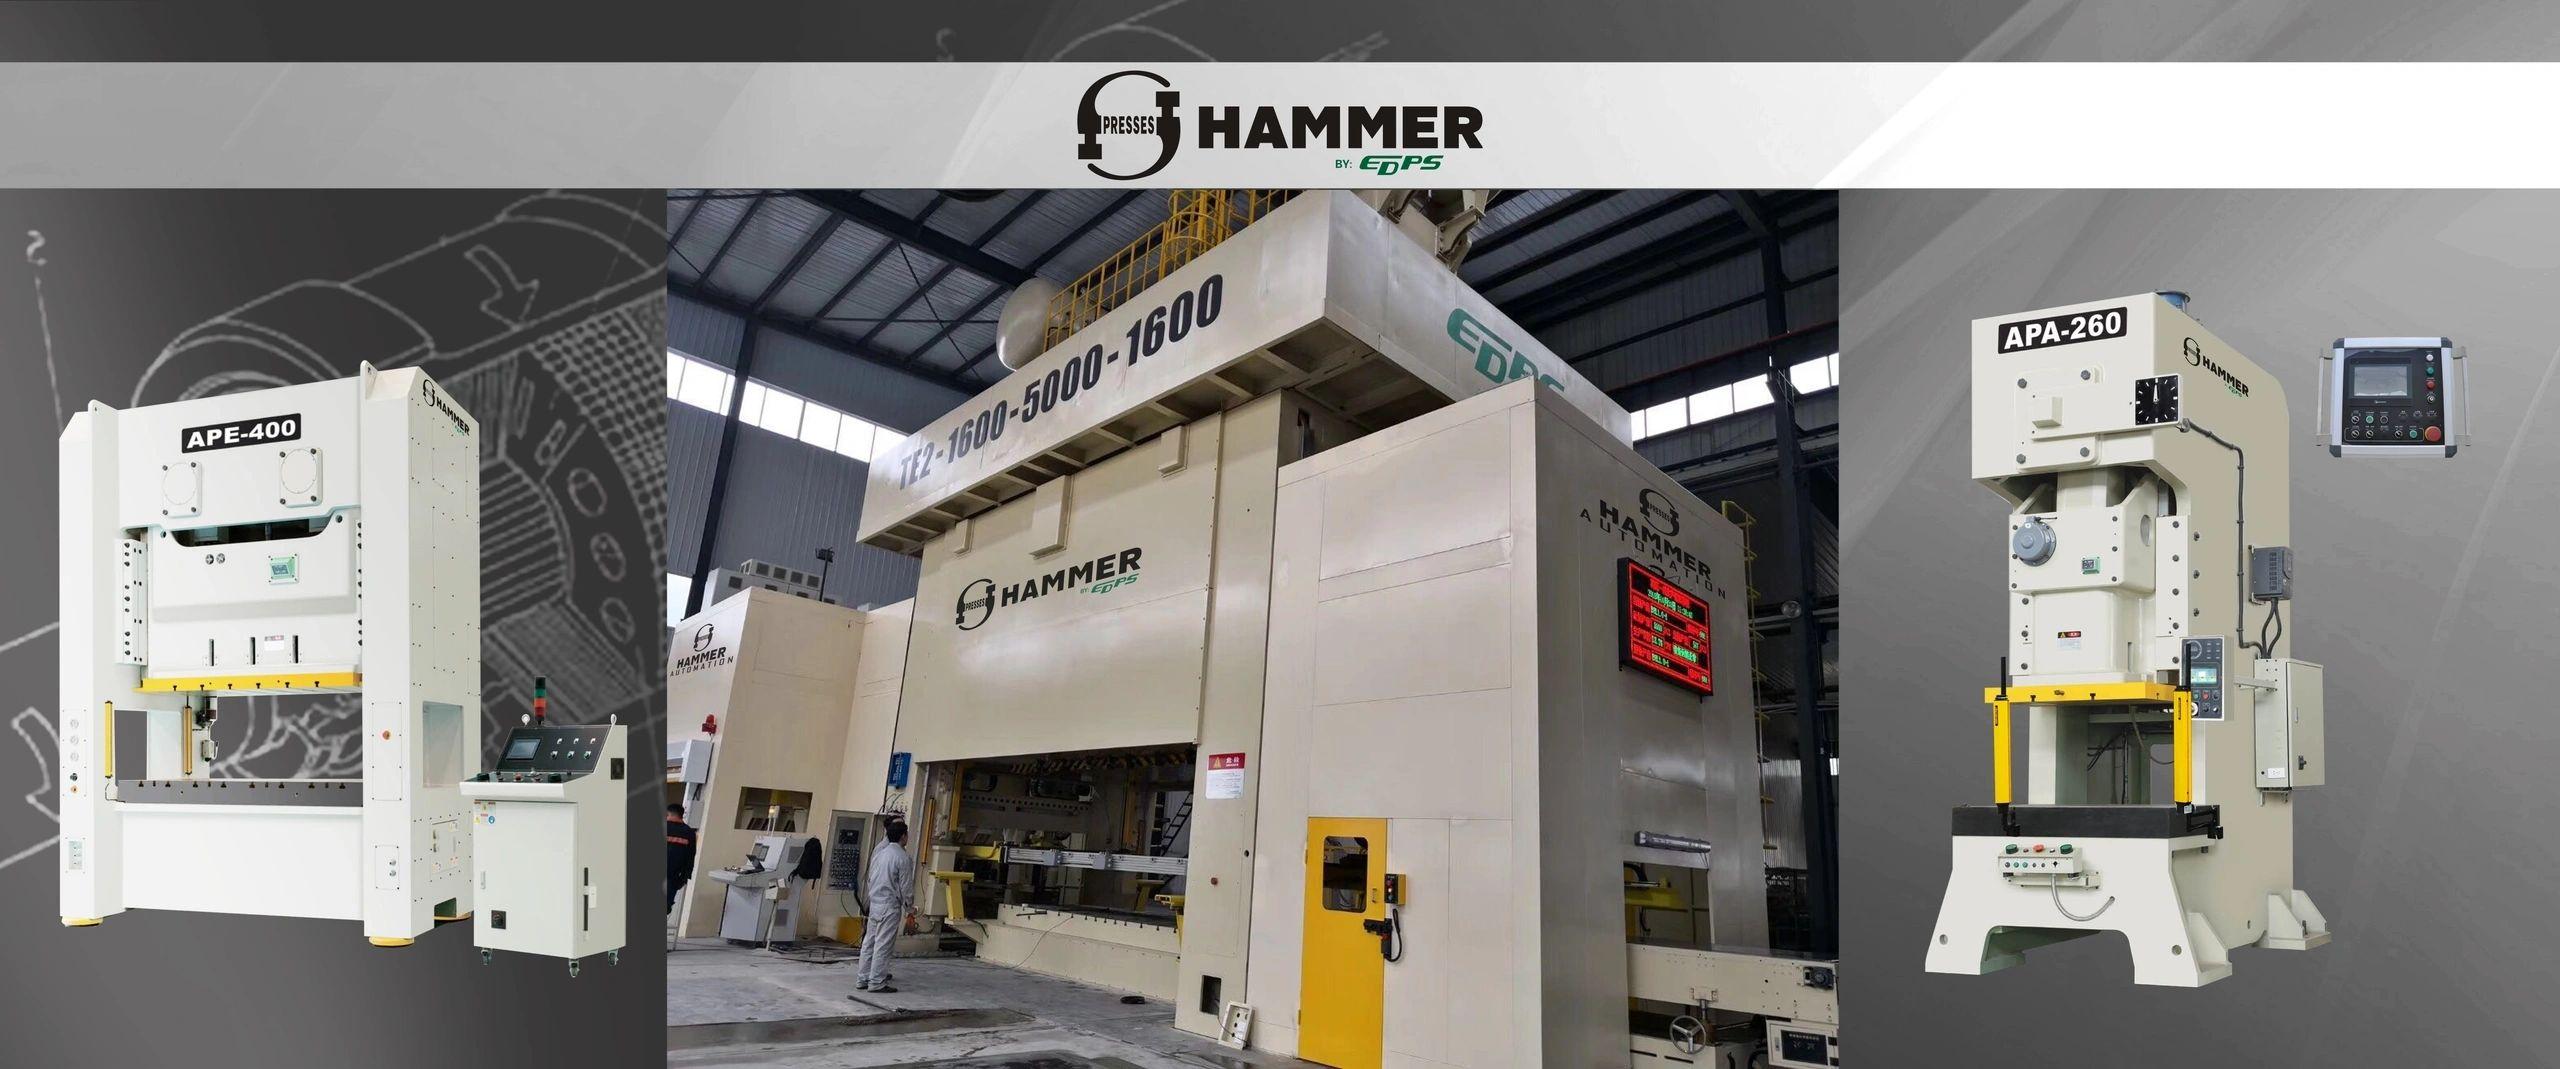 Product Hammer Presses - Machinery Service, Maintenance image